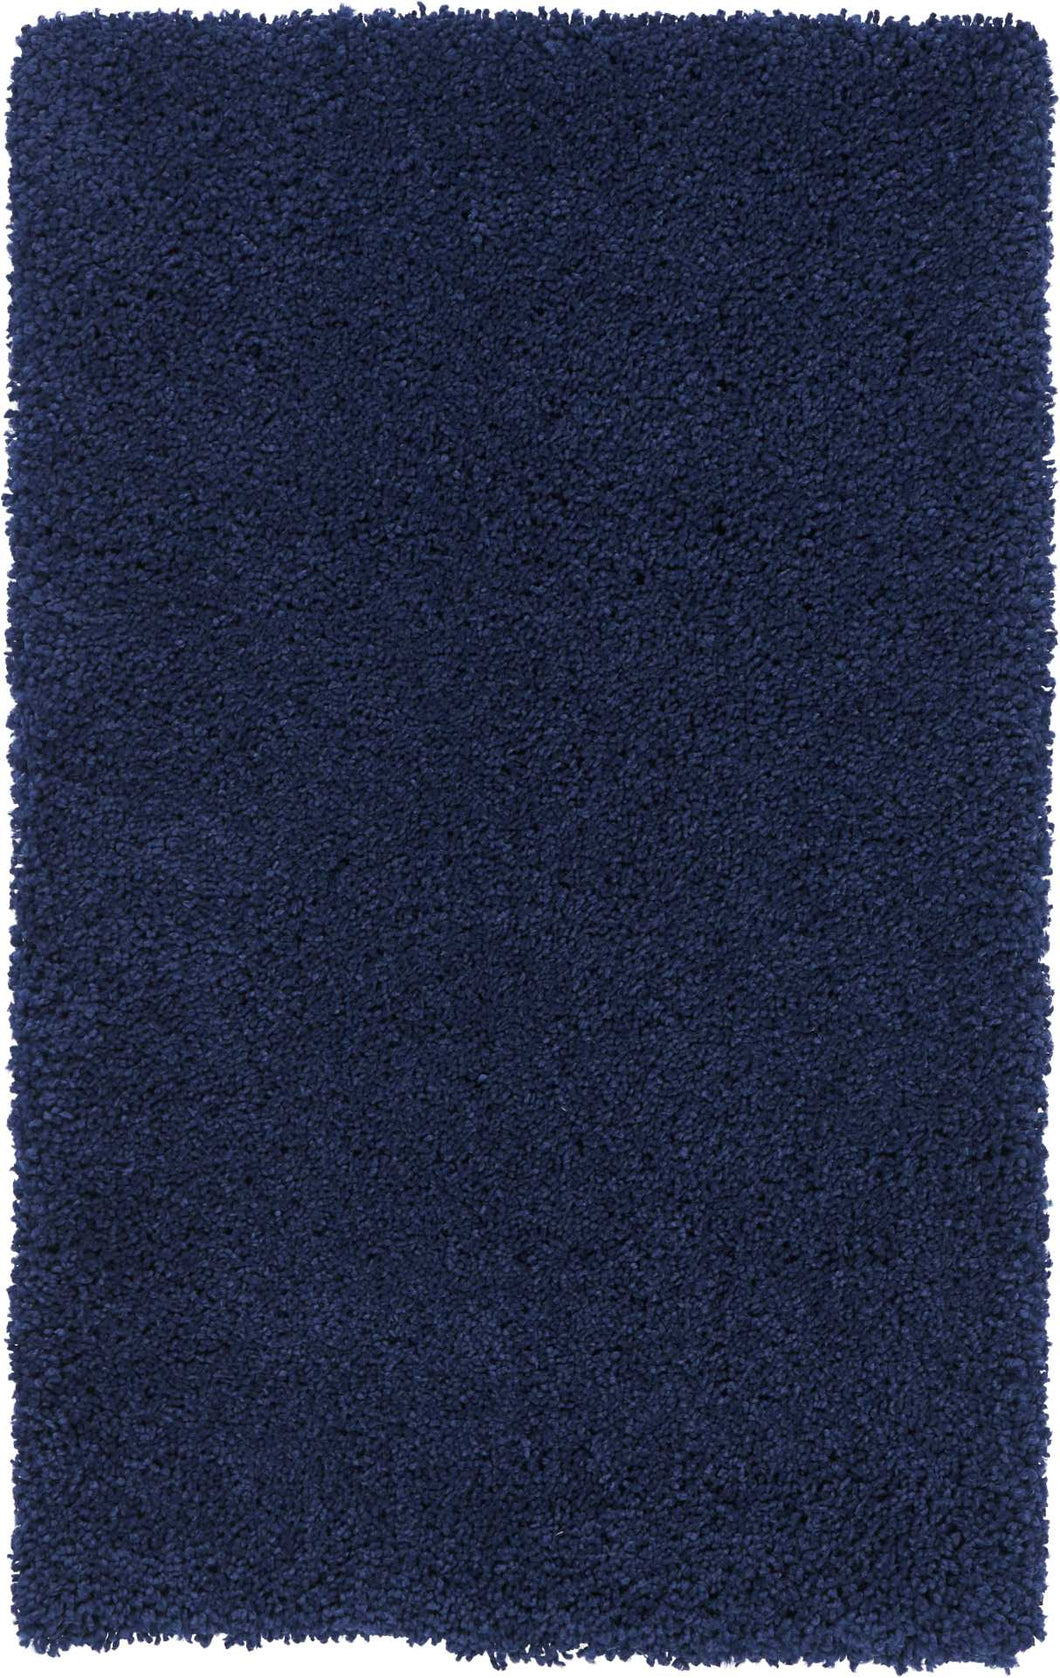 Nourison Malibu Shag MSG01 Dark Blue 3'x4' Area Rug MSG01 Navy